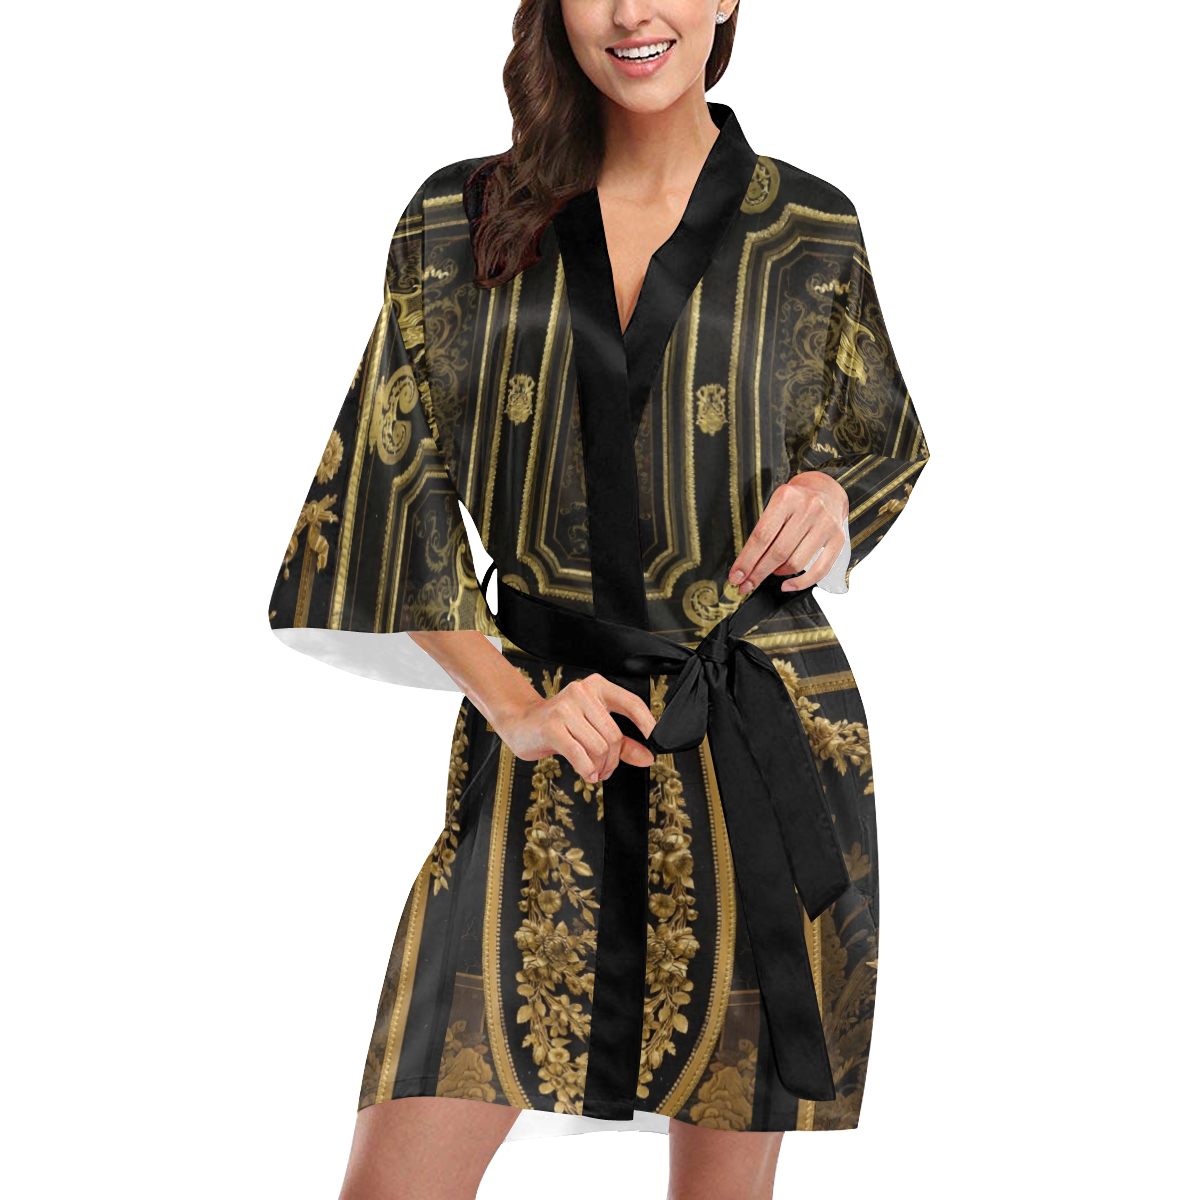 Robe | lands end bathrobe miss elaine nightgown